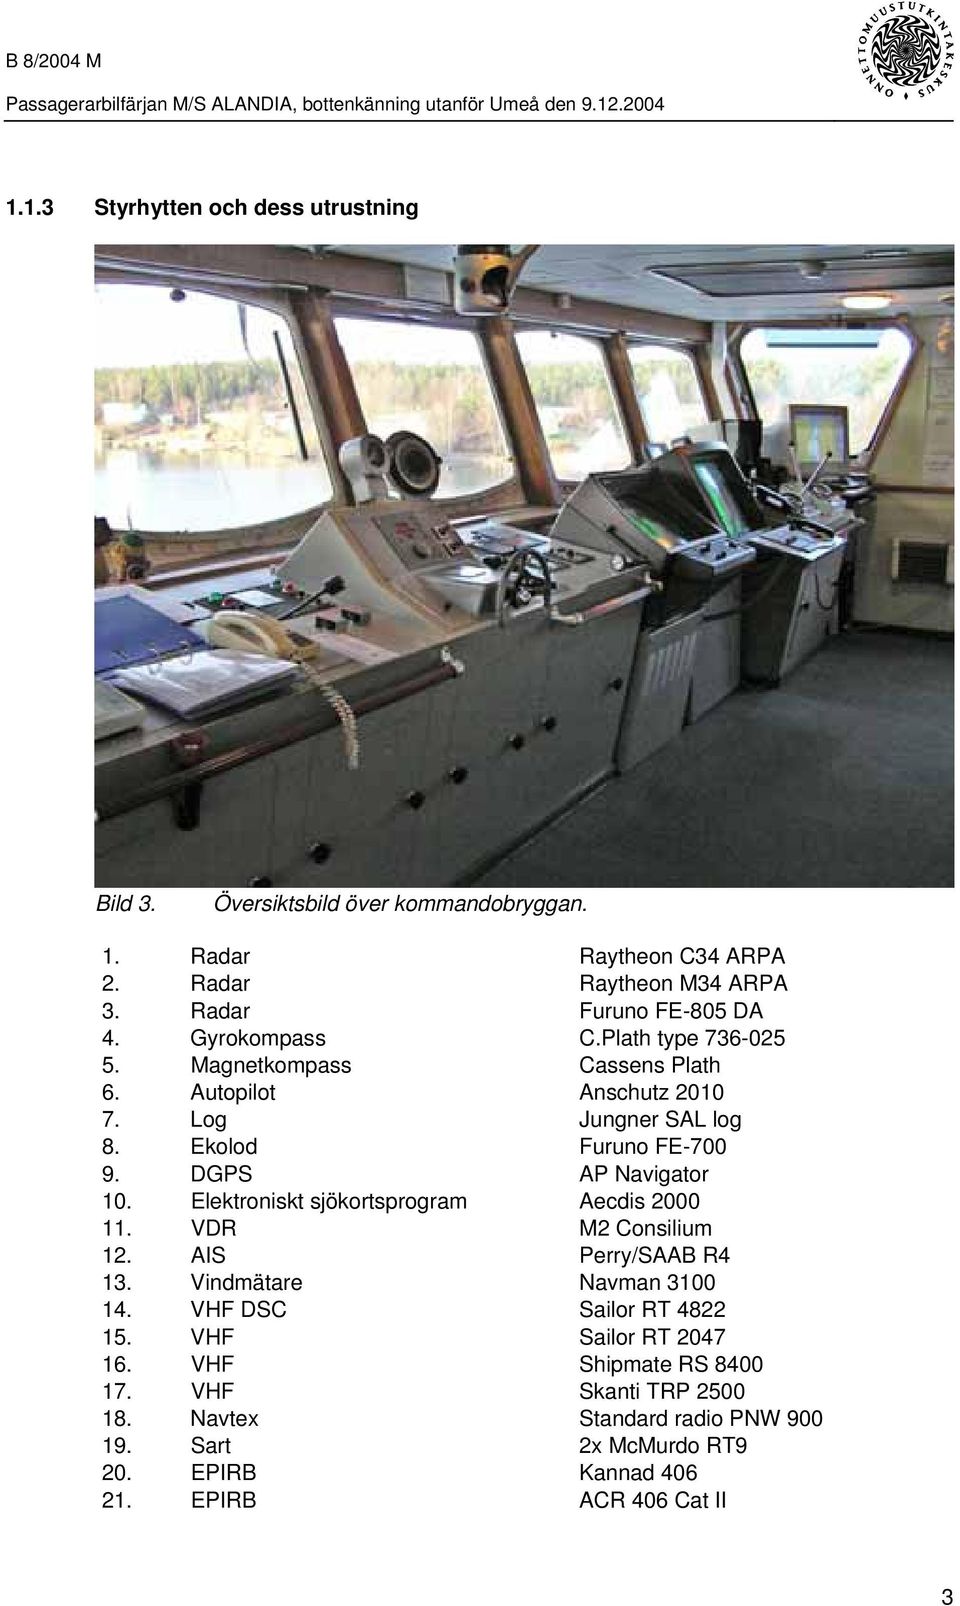 Ekolod Furuno FE-700 9. DGPS AP Navigator 10. Elektroniskt sjökortsprogram Aecdis 2000 11. VDR M2 Consilium 12. AIS Perry/SAAB R4 13. Vindmätare Navman 3100 14.